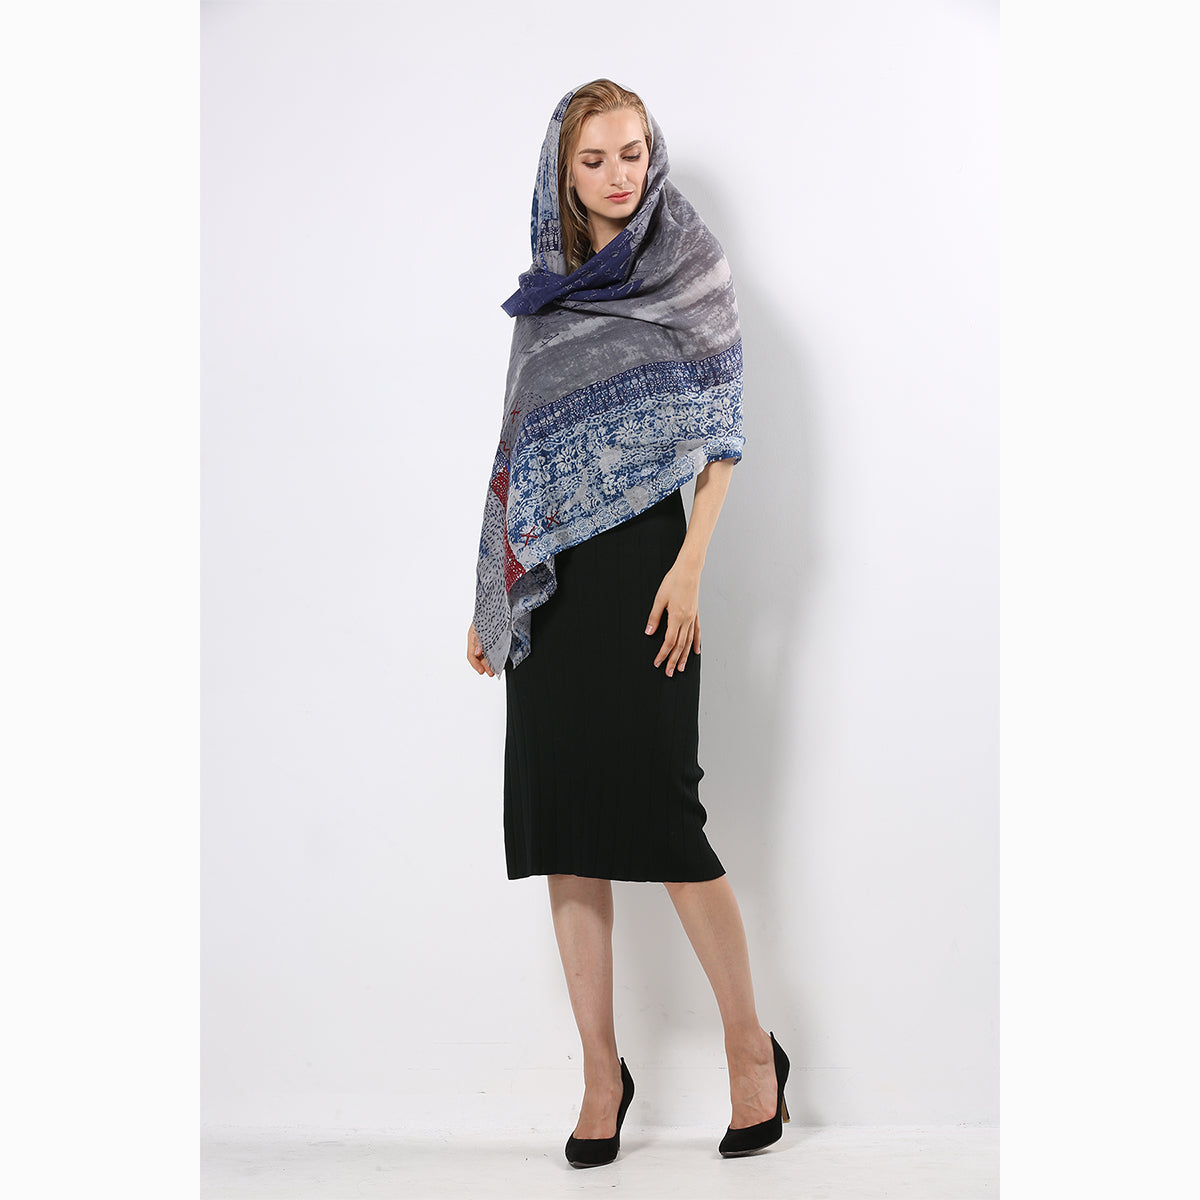 Ugg 100% Australian Merino Wool Scarf Blue Grey-Scarves-PEROZ Accessories